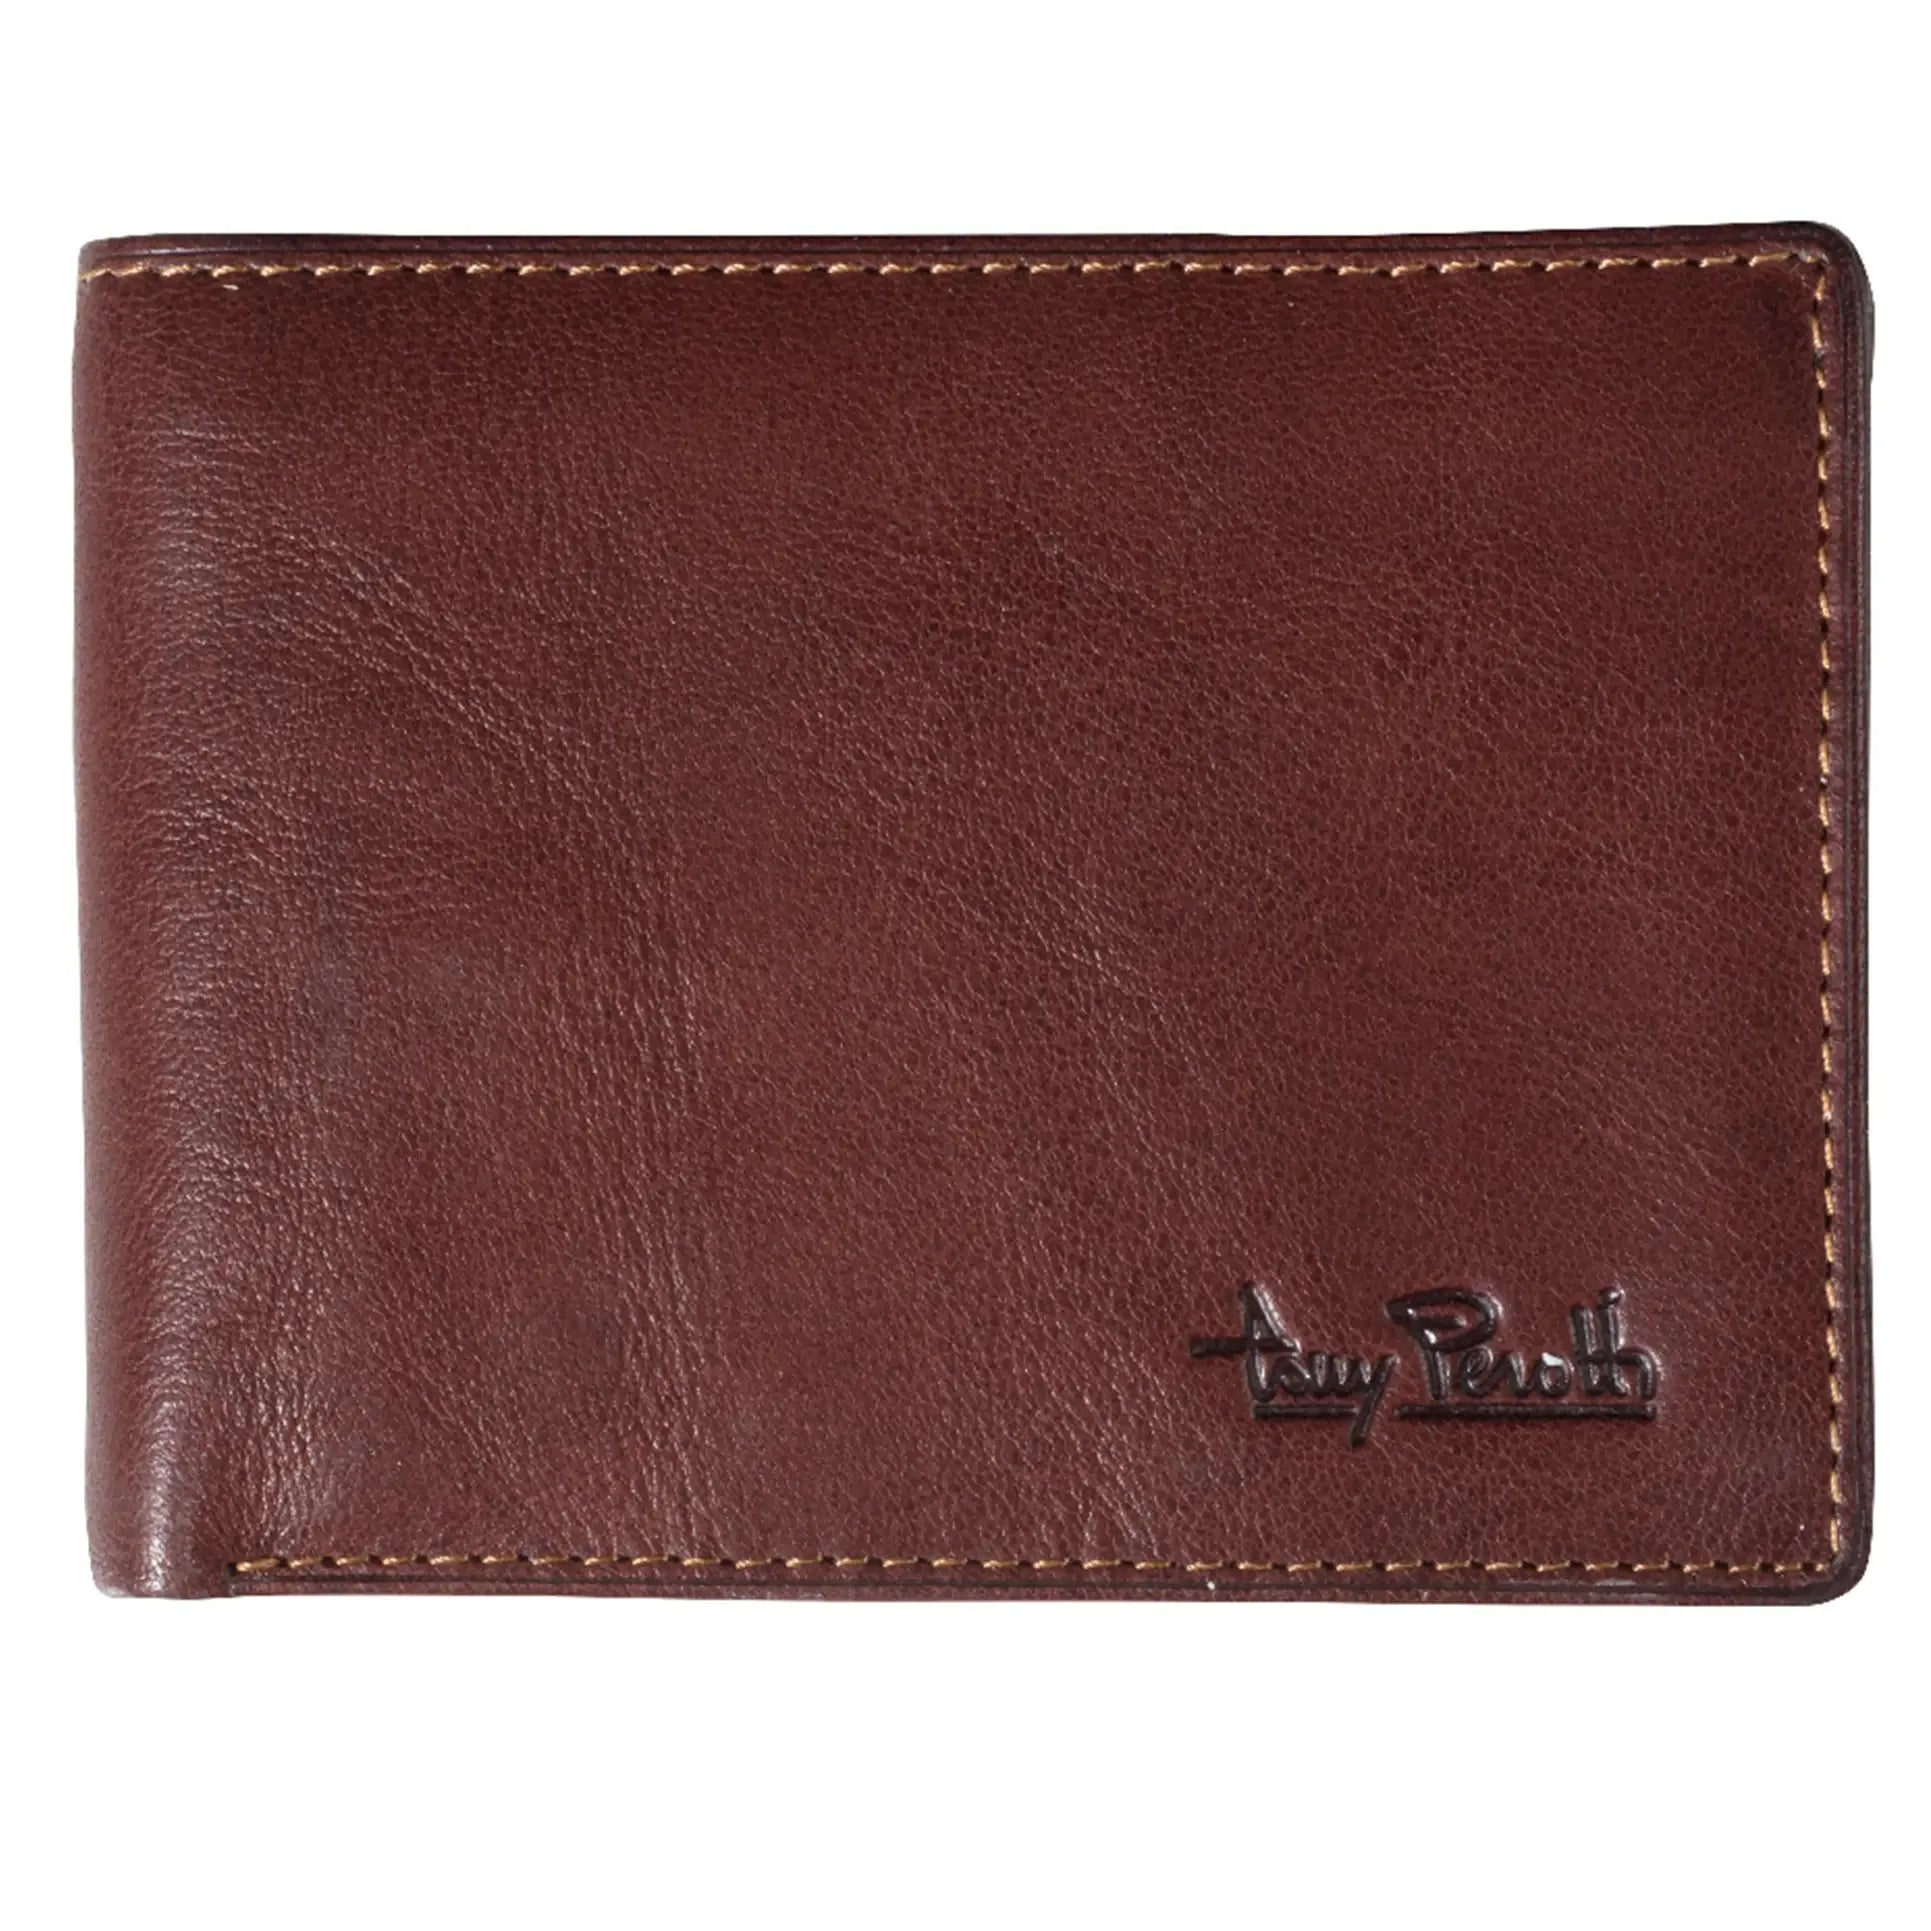 Tony Perotti Furbo wallet 11 cm - Dark brown